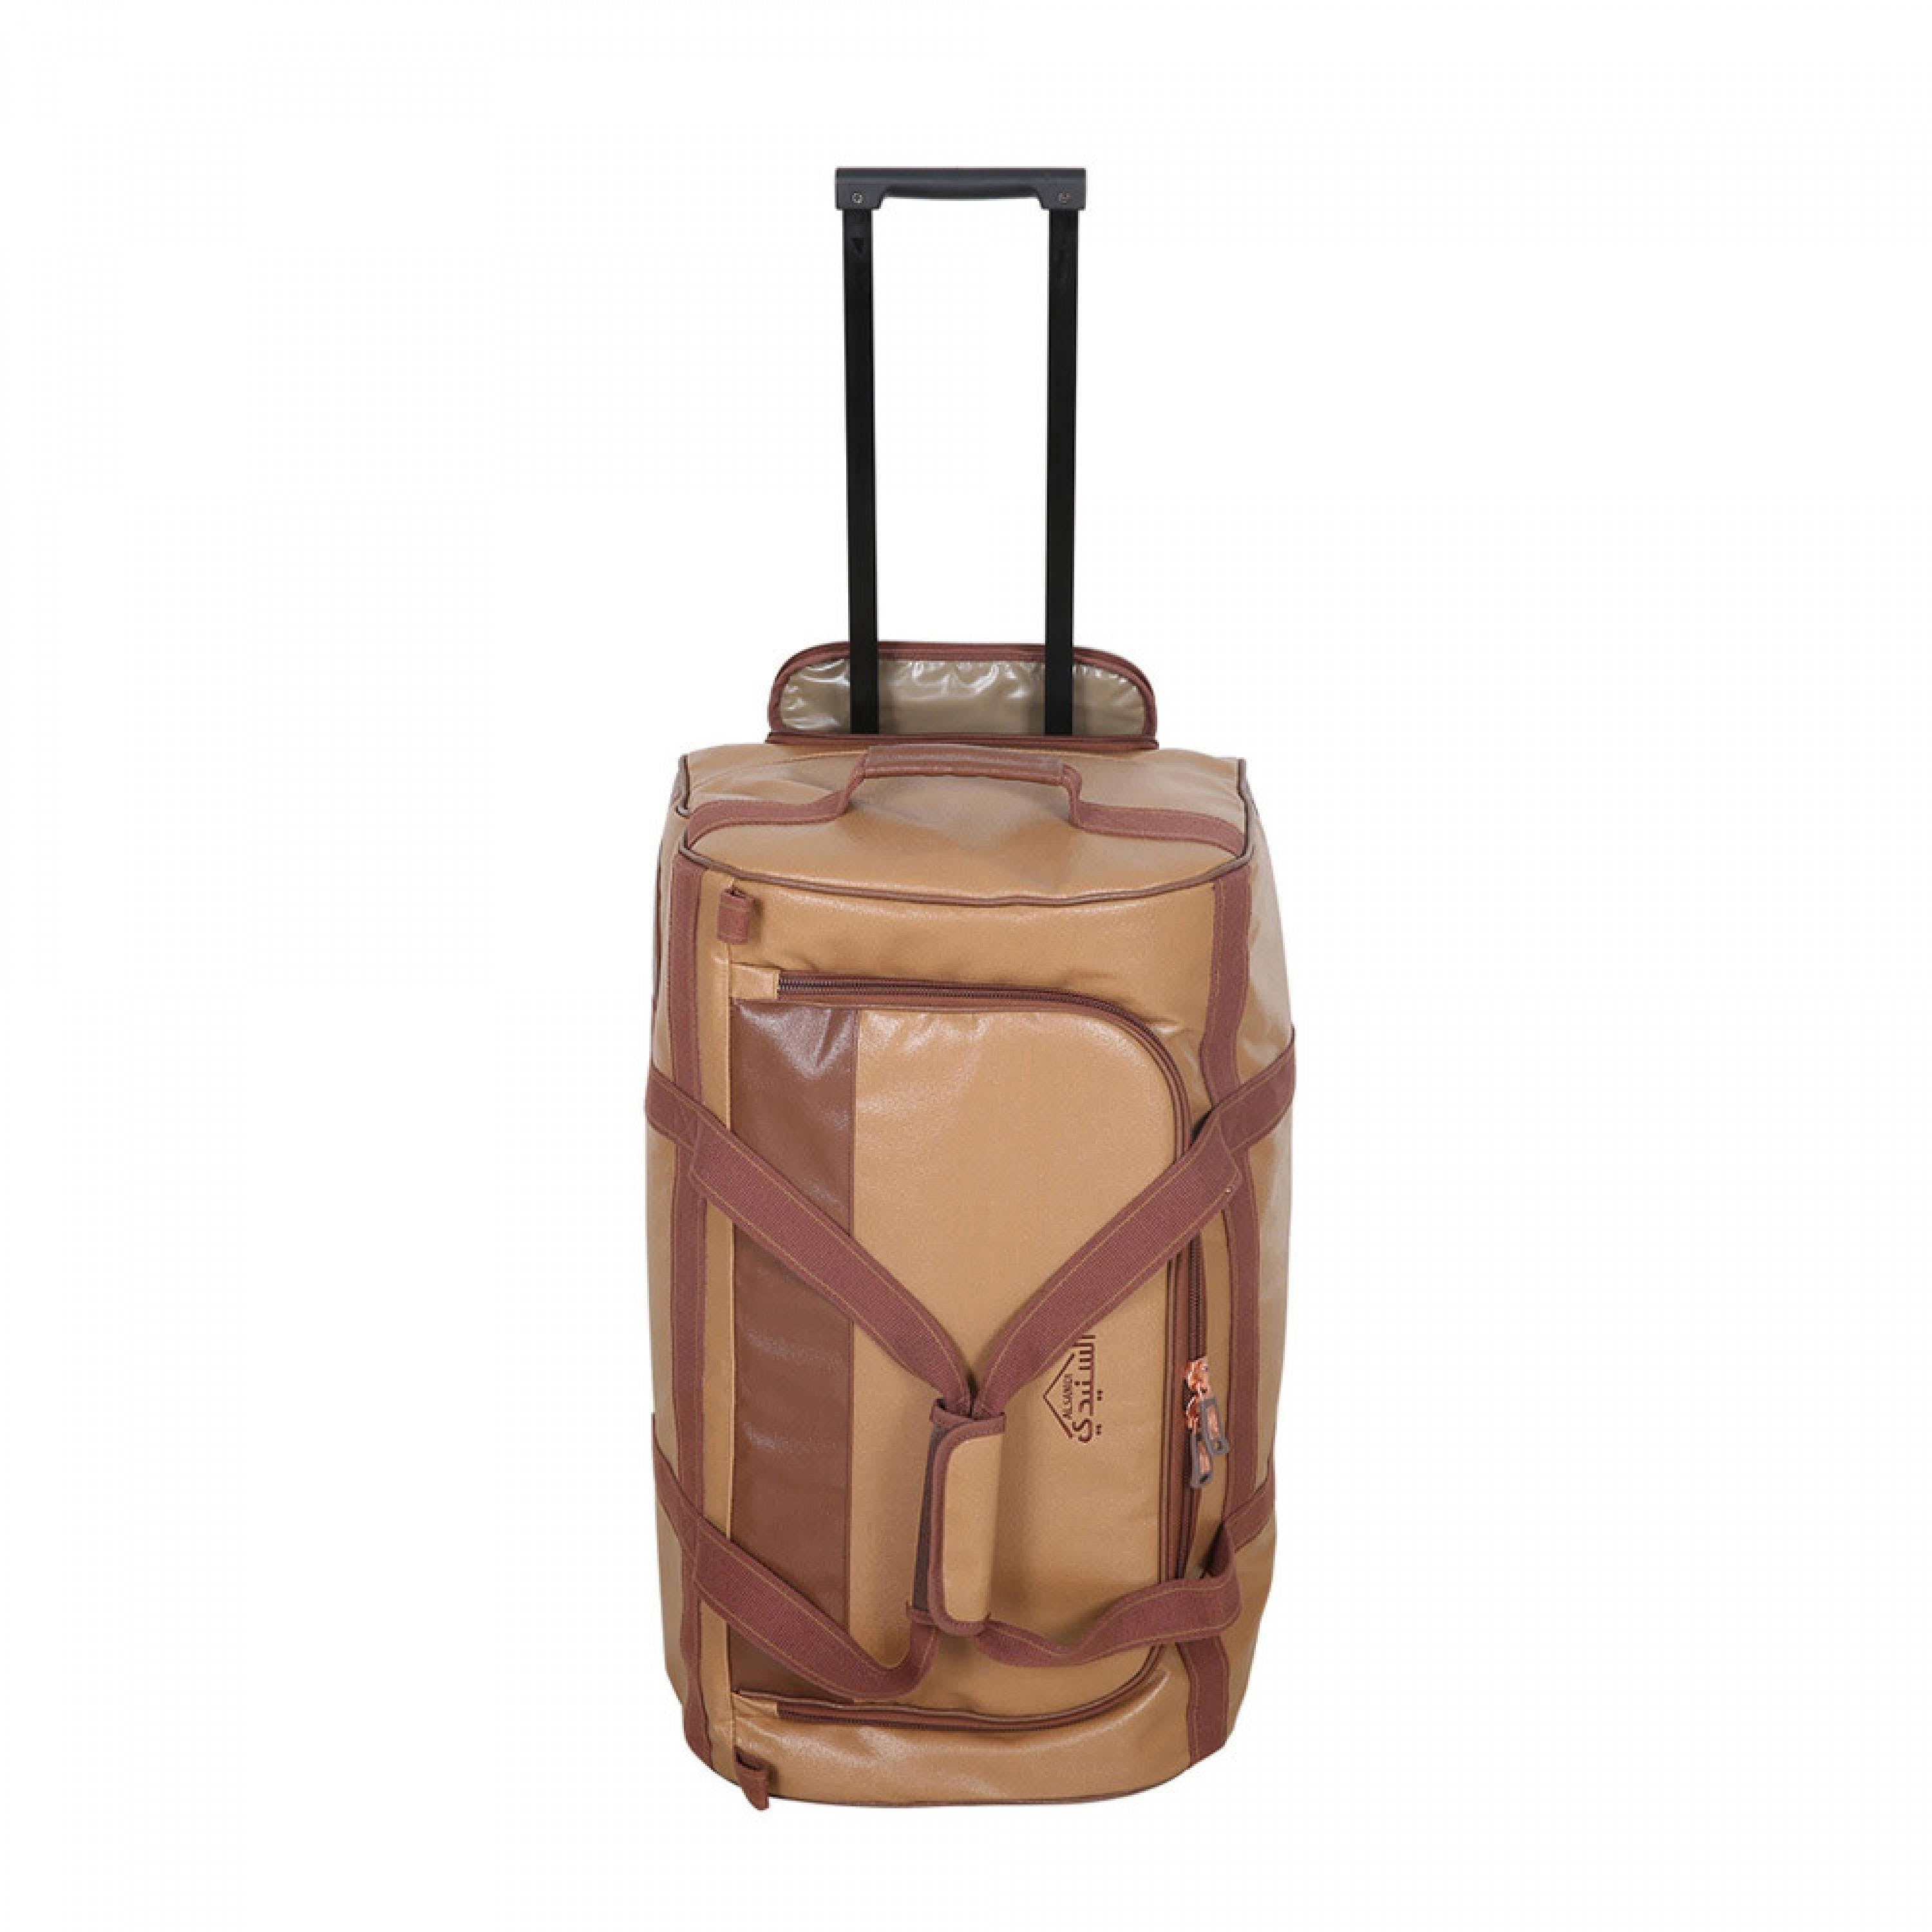 Al-Sanidi Travel Bag - Your Perfect Travel Companion | 60 * 35.5 * 32 cm